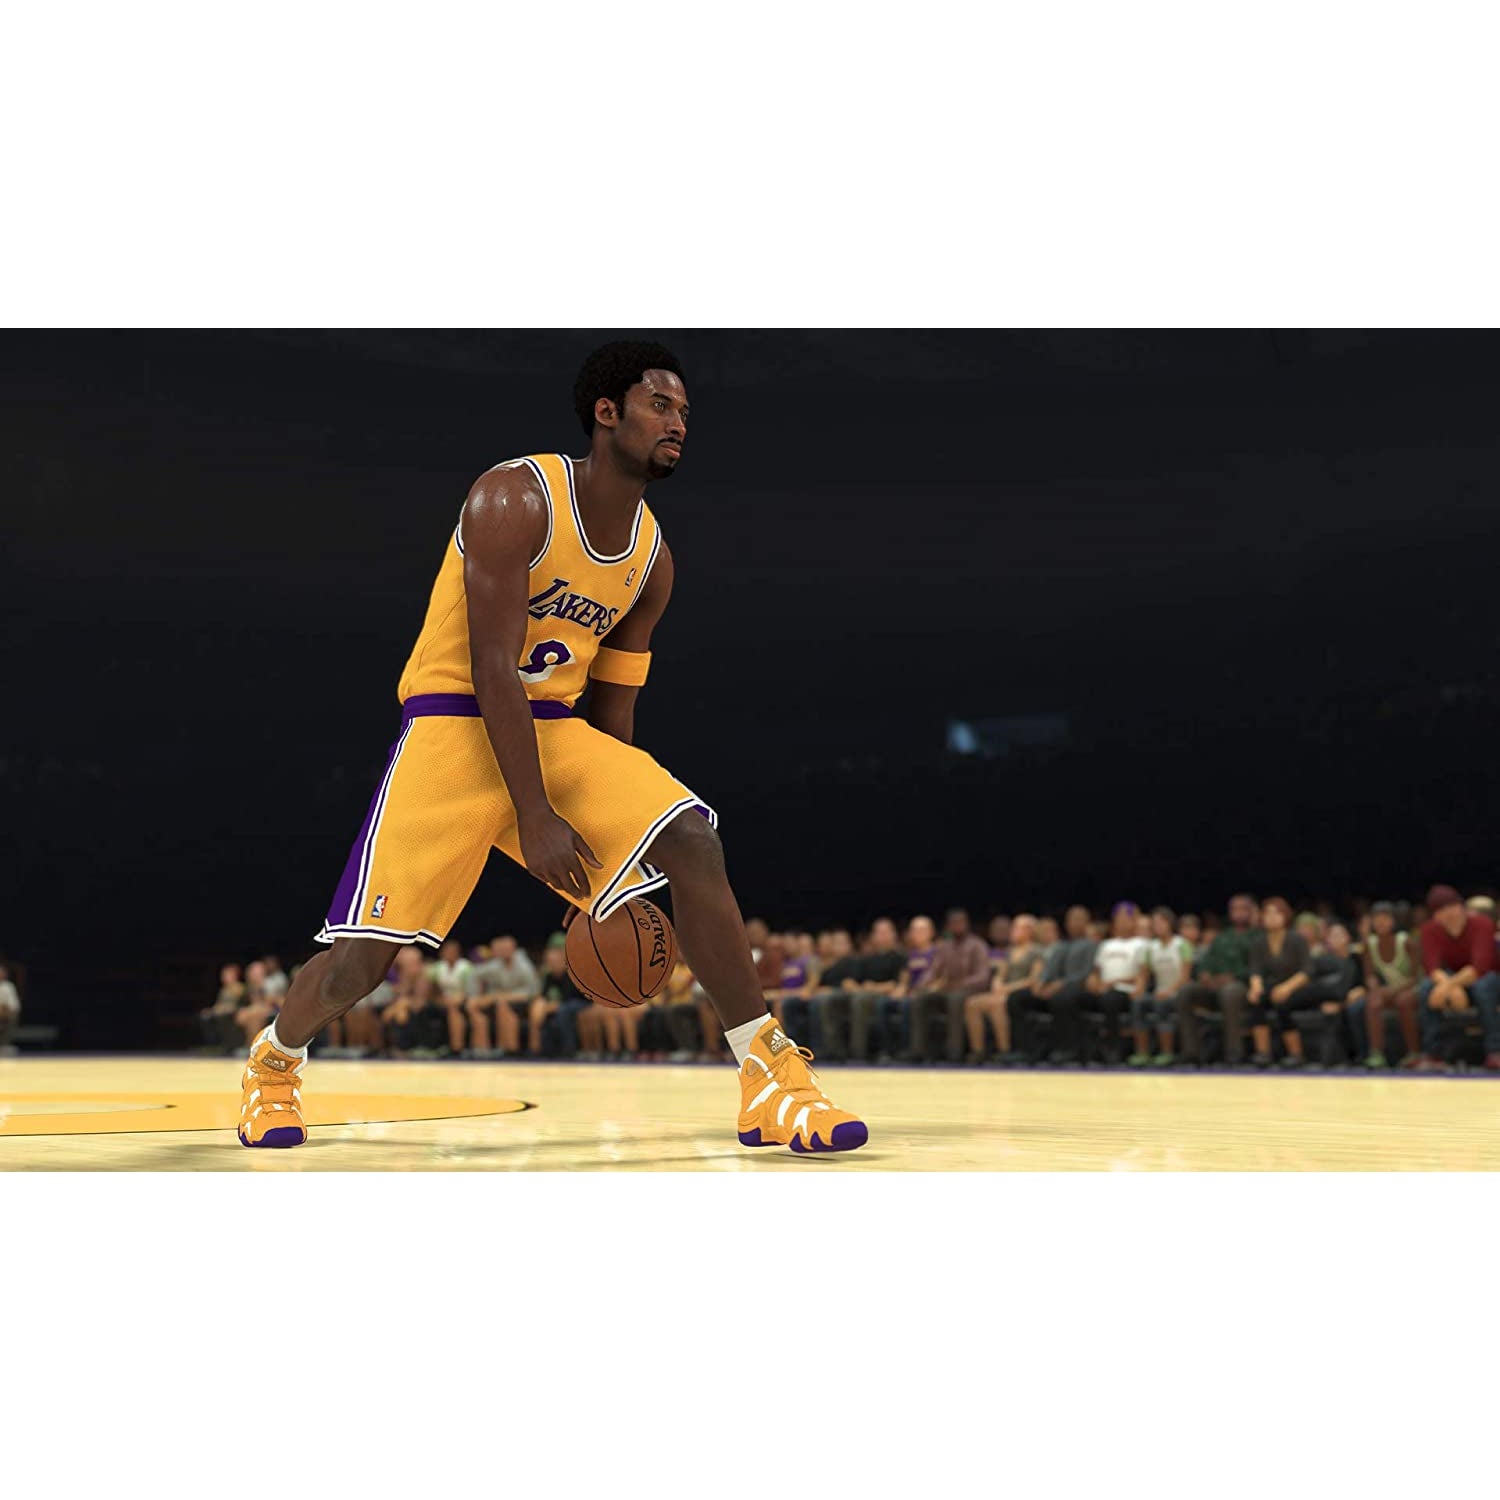 NBA 2K21 - Mamba Forever Edition (PS4)